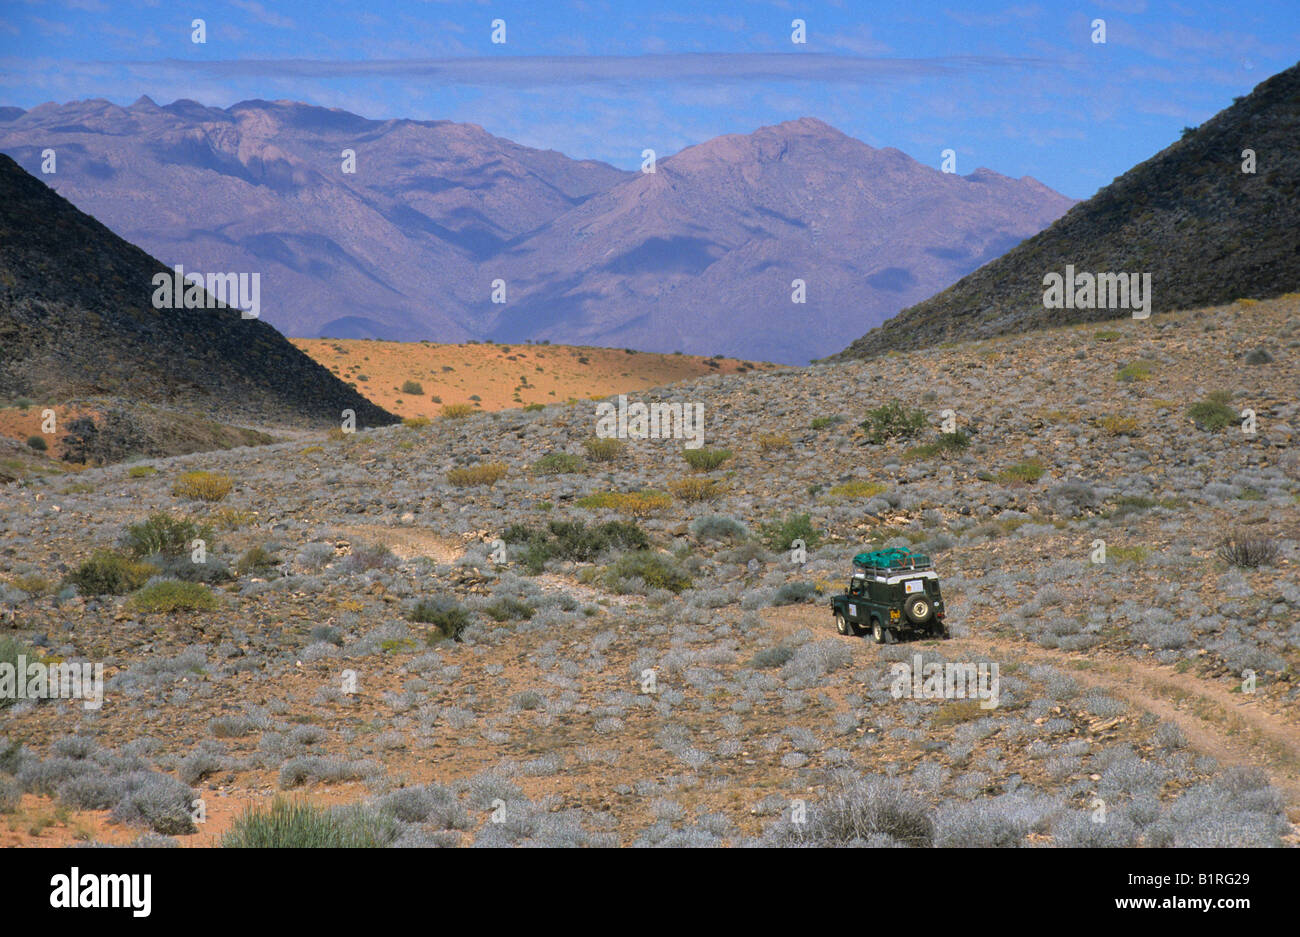 Land Rover in stony desert landscape, Brandberg Mountain backdrop, near Uis, Namibia, Africa Stock Photo